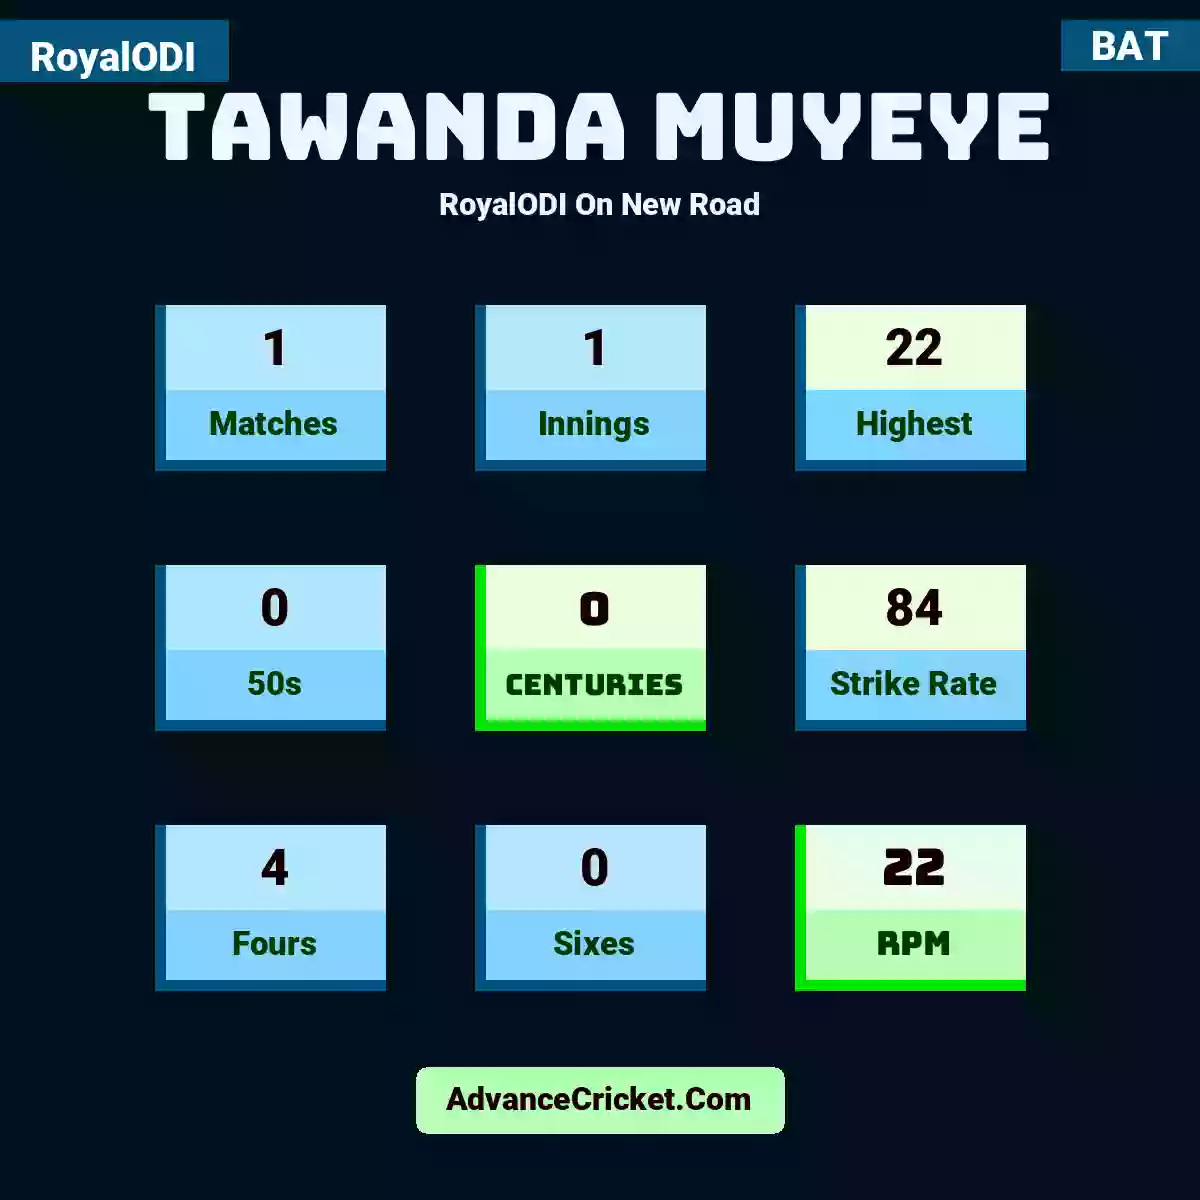 Tawanda Muyeye RoyalODI  On New Road, Tawanda Muyeye played 1 matches, scored 22 runs as highest, 0 half-centuries, and 0 centuries, with a strike rate of 84. T.Muyeye hit 4 fours and 0 sixes, with an RPM of 22.